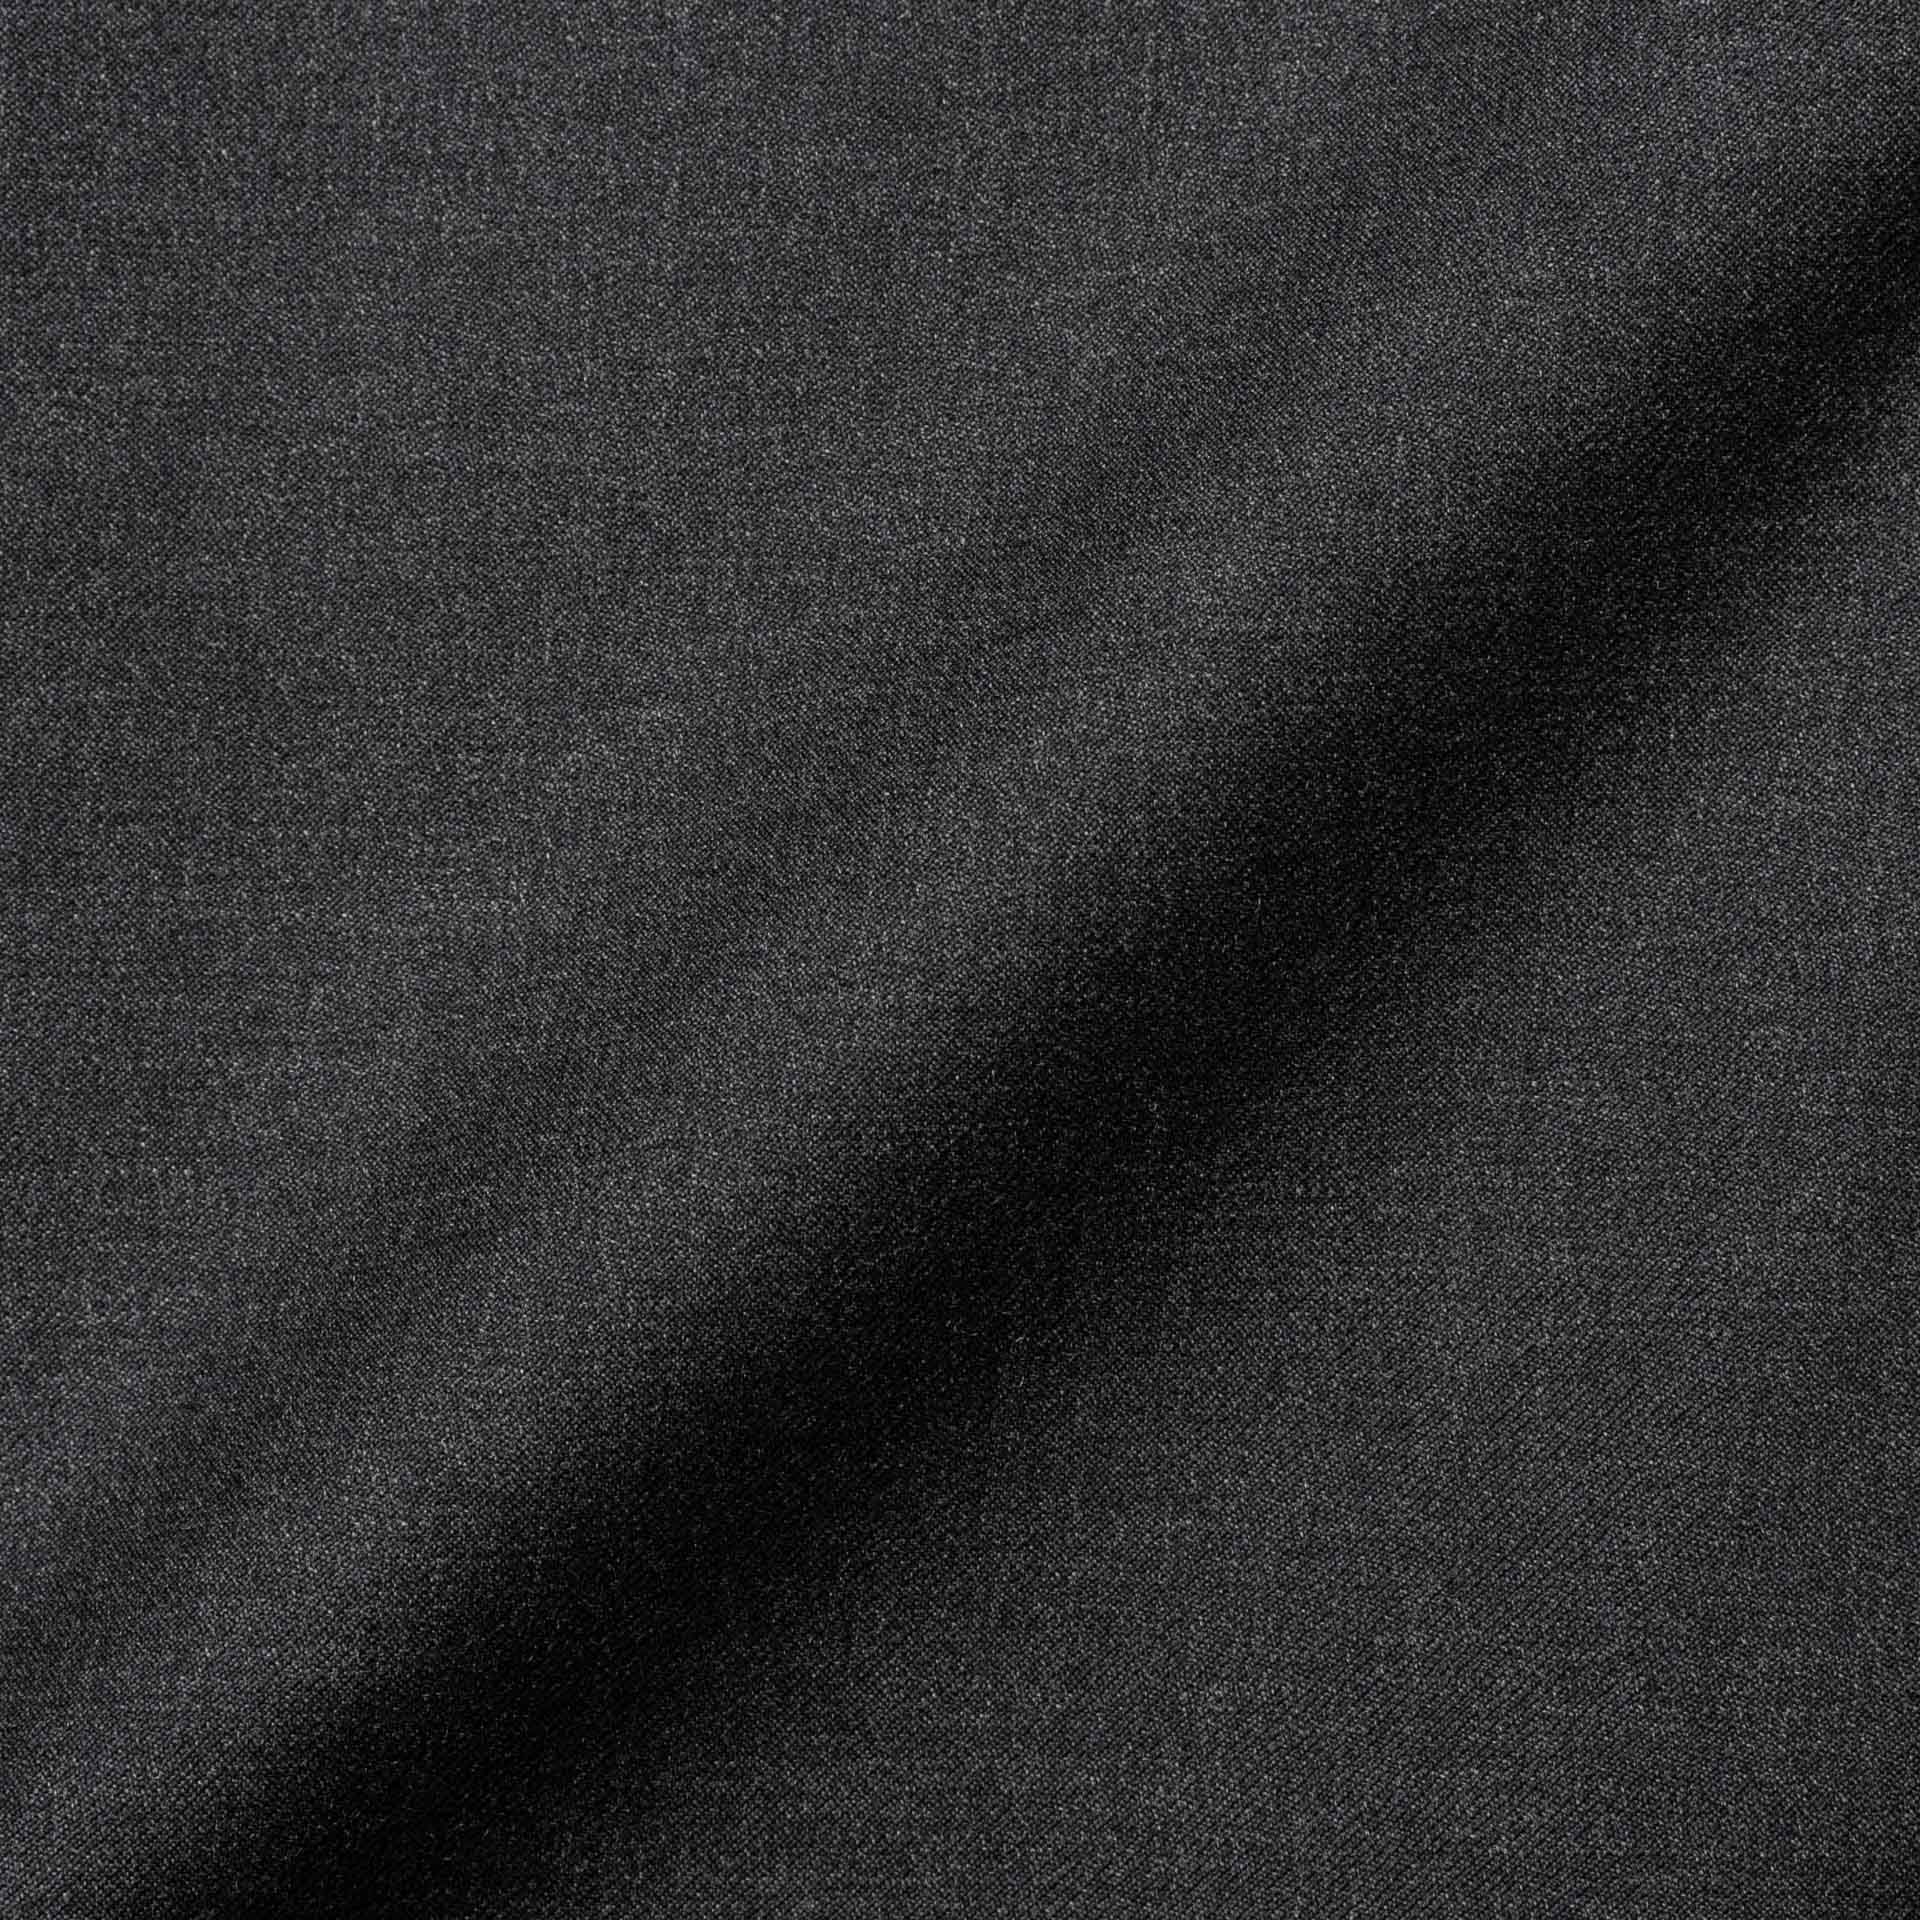 RUBINACCI LH Hand Made Bespoke Charcoal Gray Wool Blazer Sports Coat EU 50 US 40 RUBINACCI